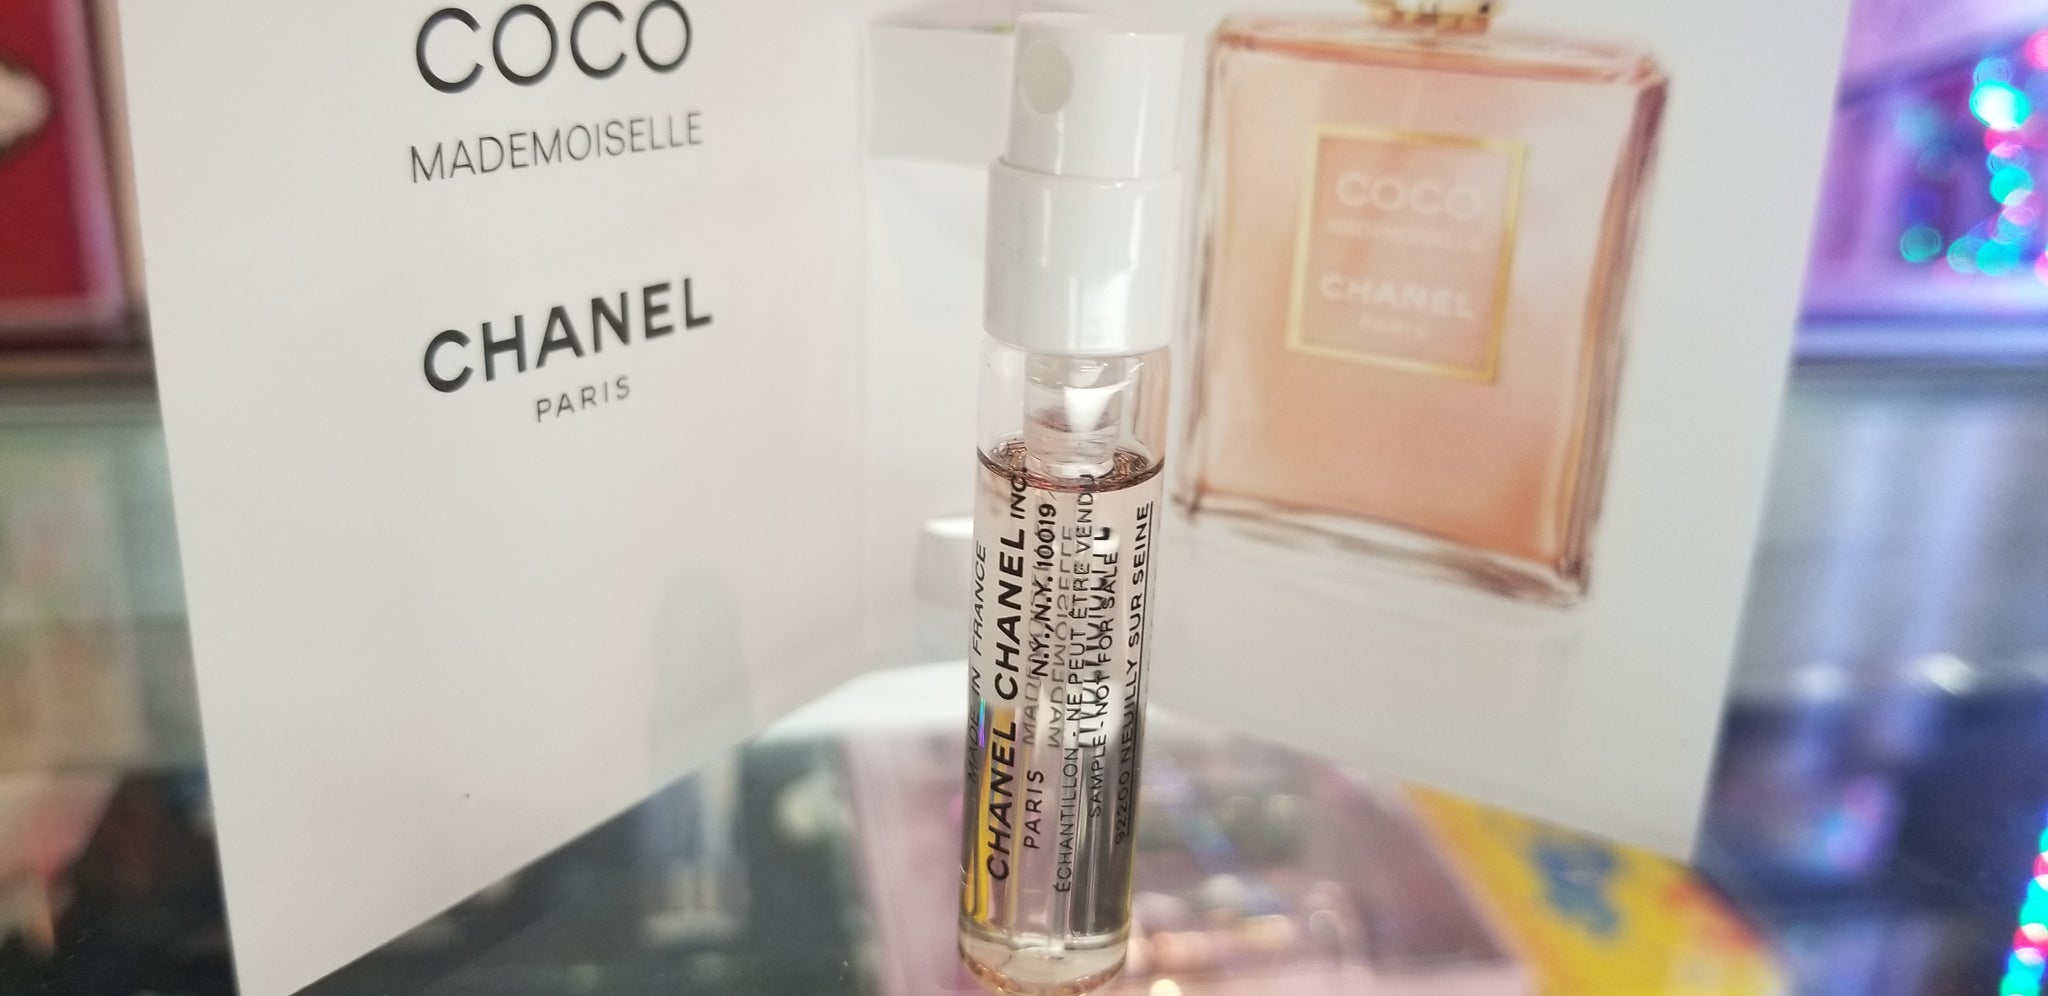 chanel perfume sample pack